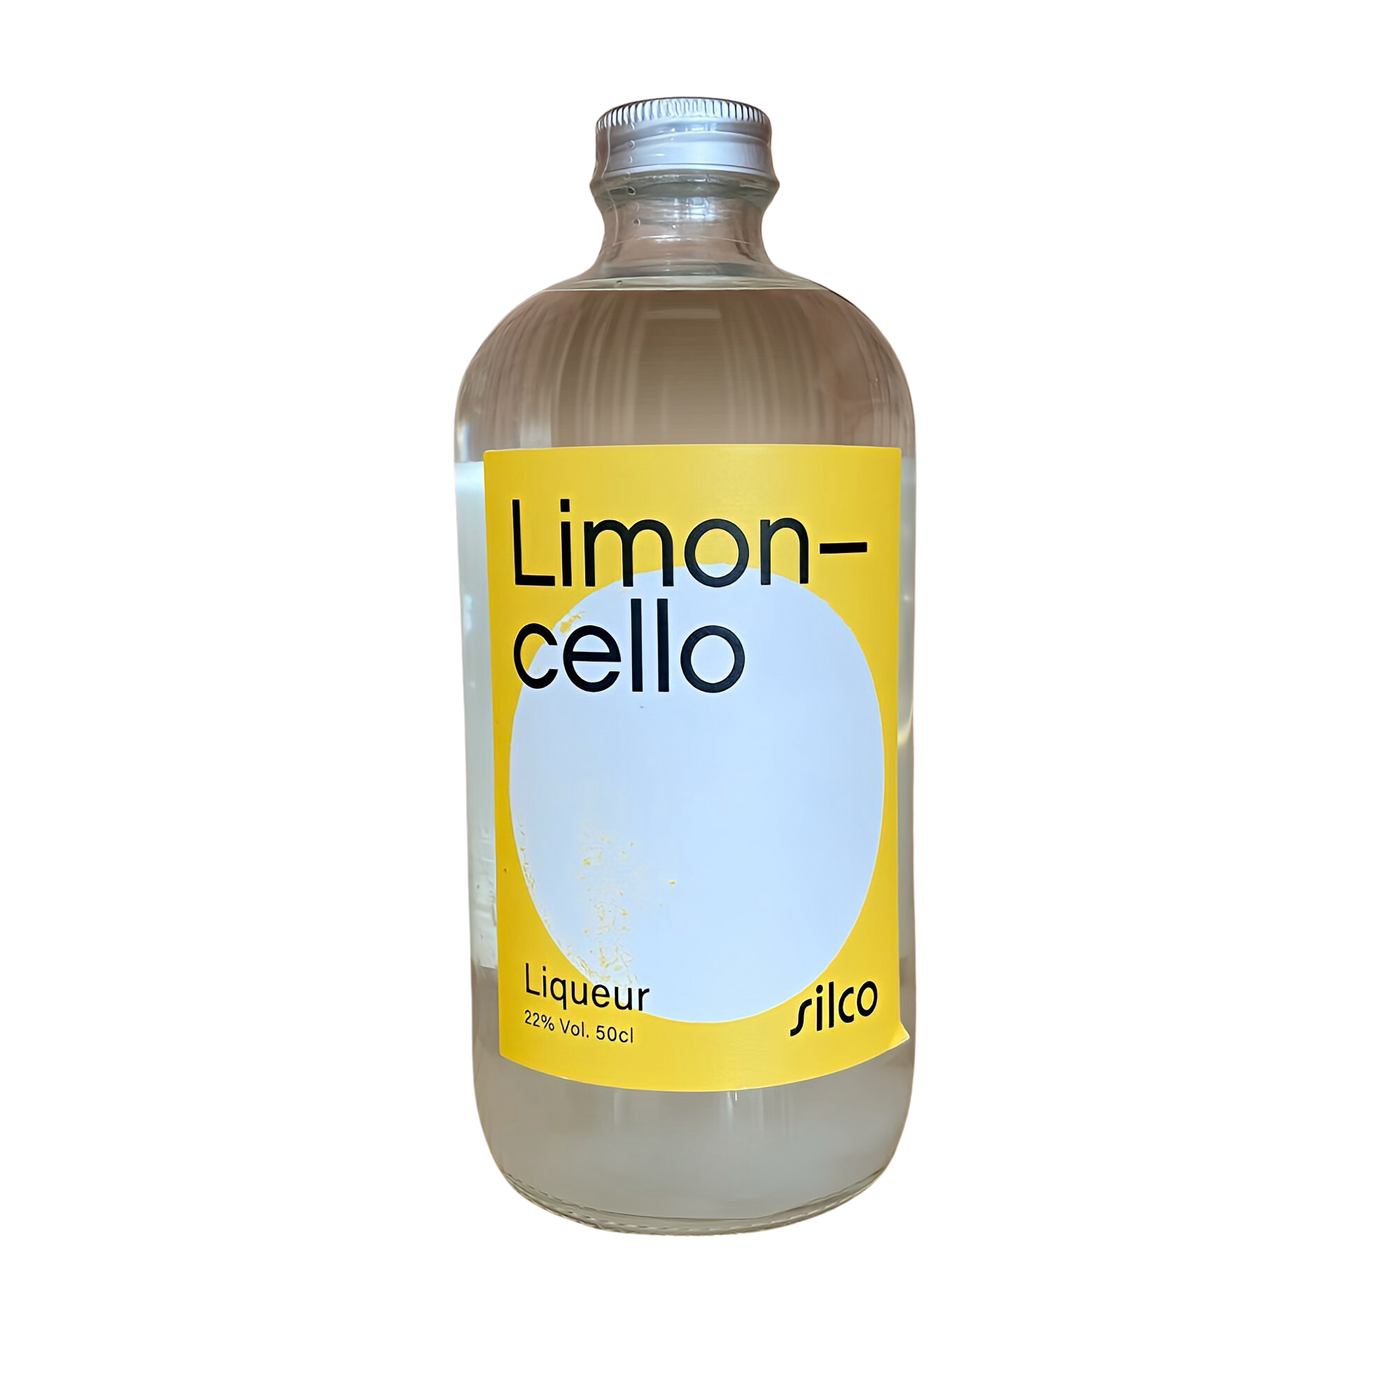 Limon-cello Liqueur